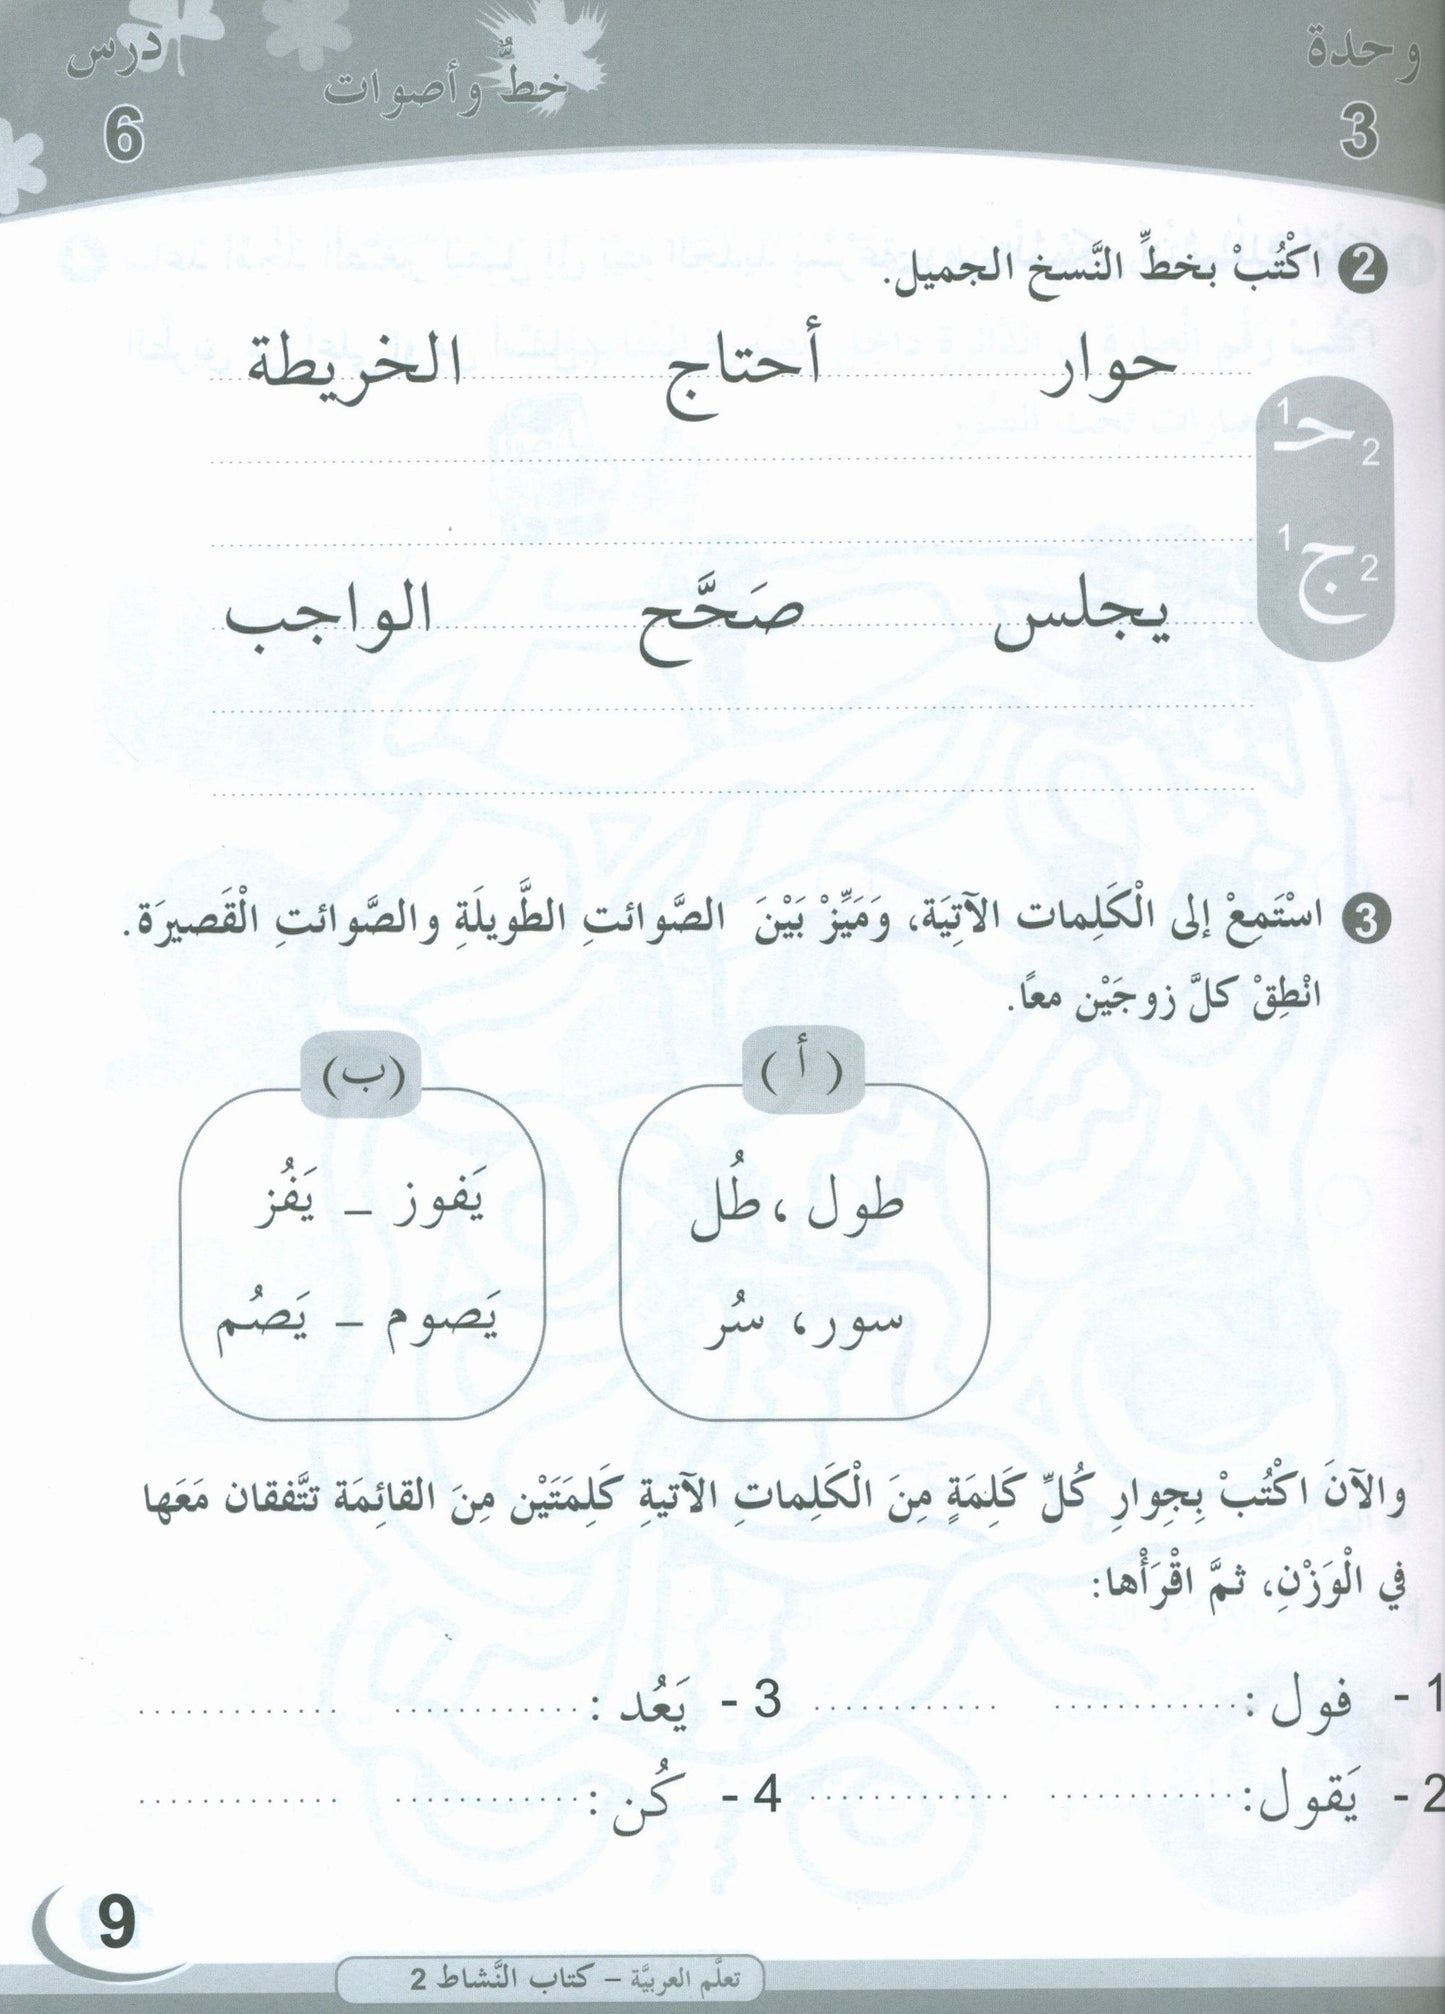 ICO Learn Arabic - Workbook - Level 2 Part 1 - تعلم العربية كتاب النشاط